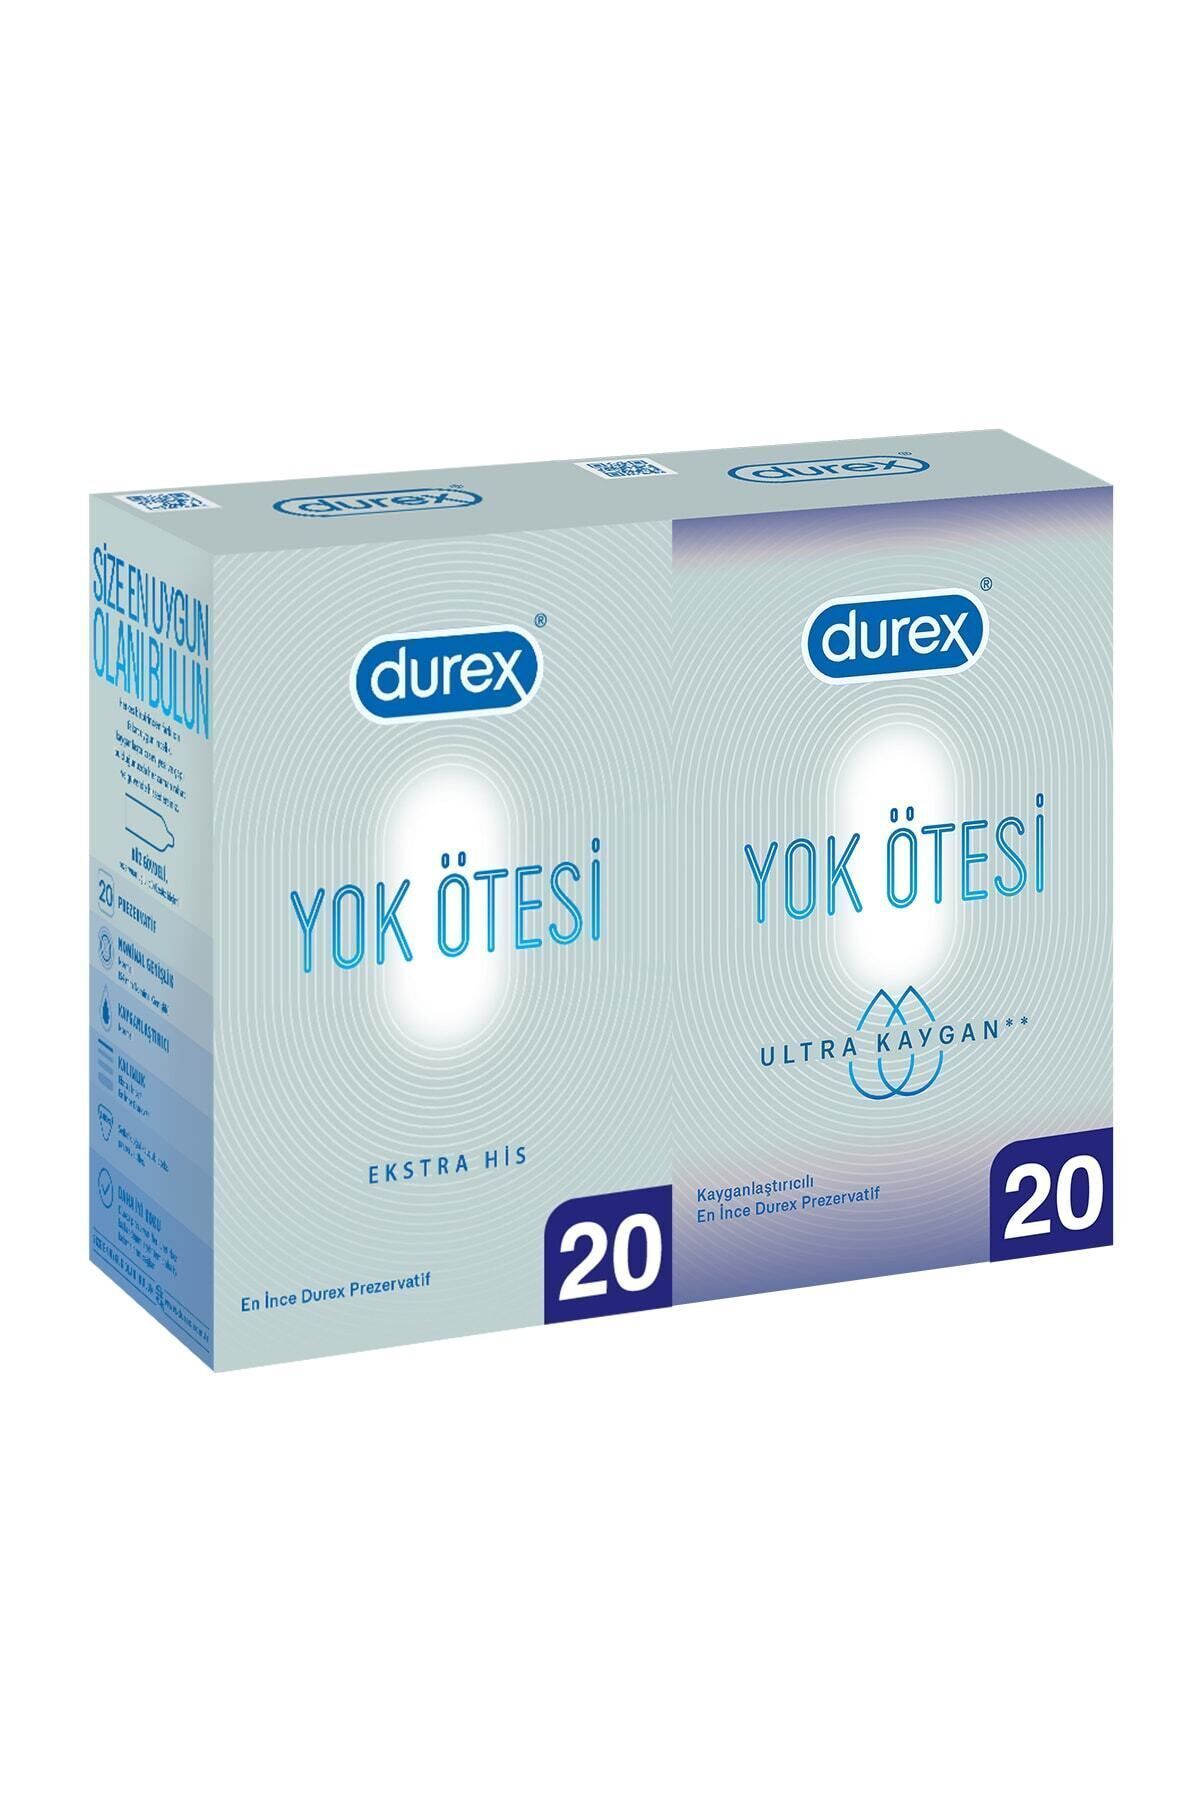 Durex Yok Ötesi Extra His + Ultra Kaygan Prezervatif 40'lı Ekonomik Paket